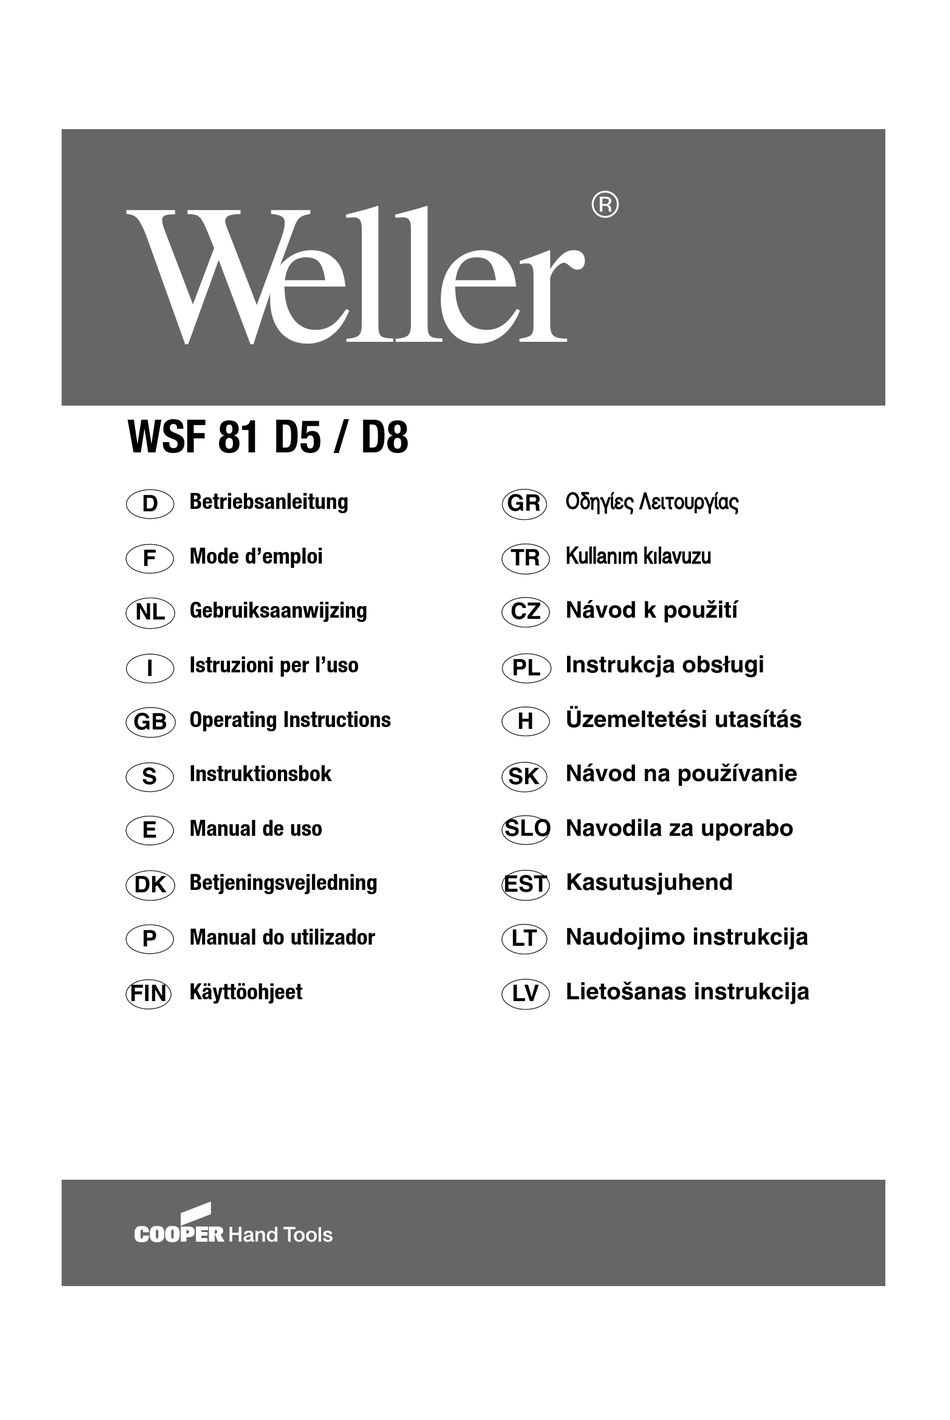 WELLER WSF 81 D5 OPERATING INSTRUCTIONS MANUAL Pdf Download ManualsLib